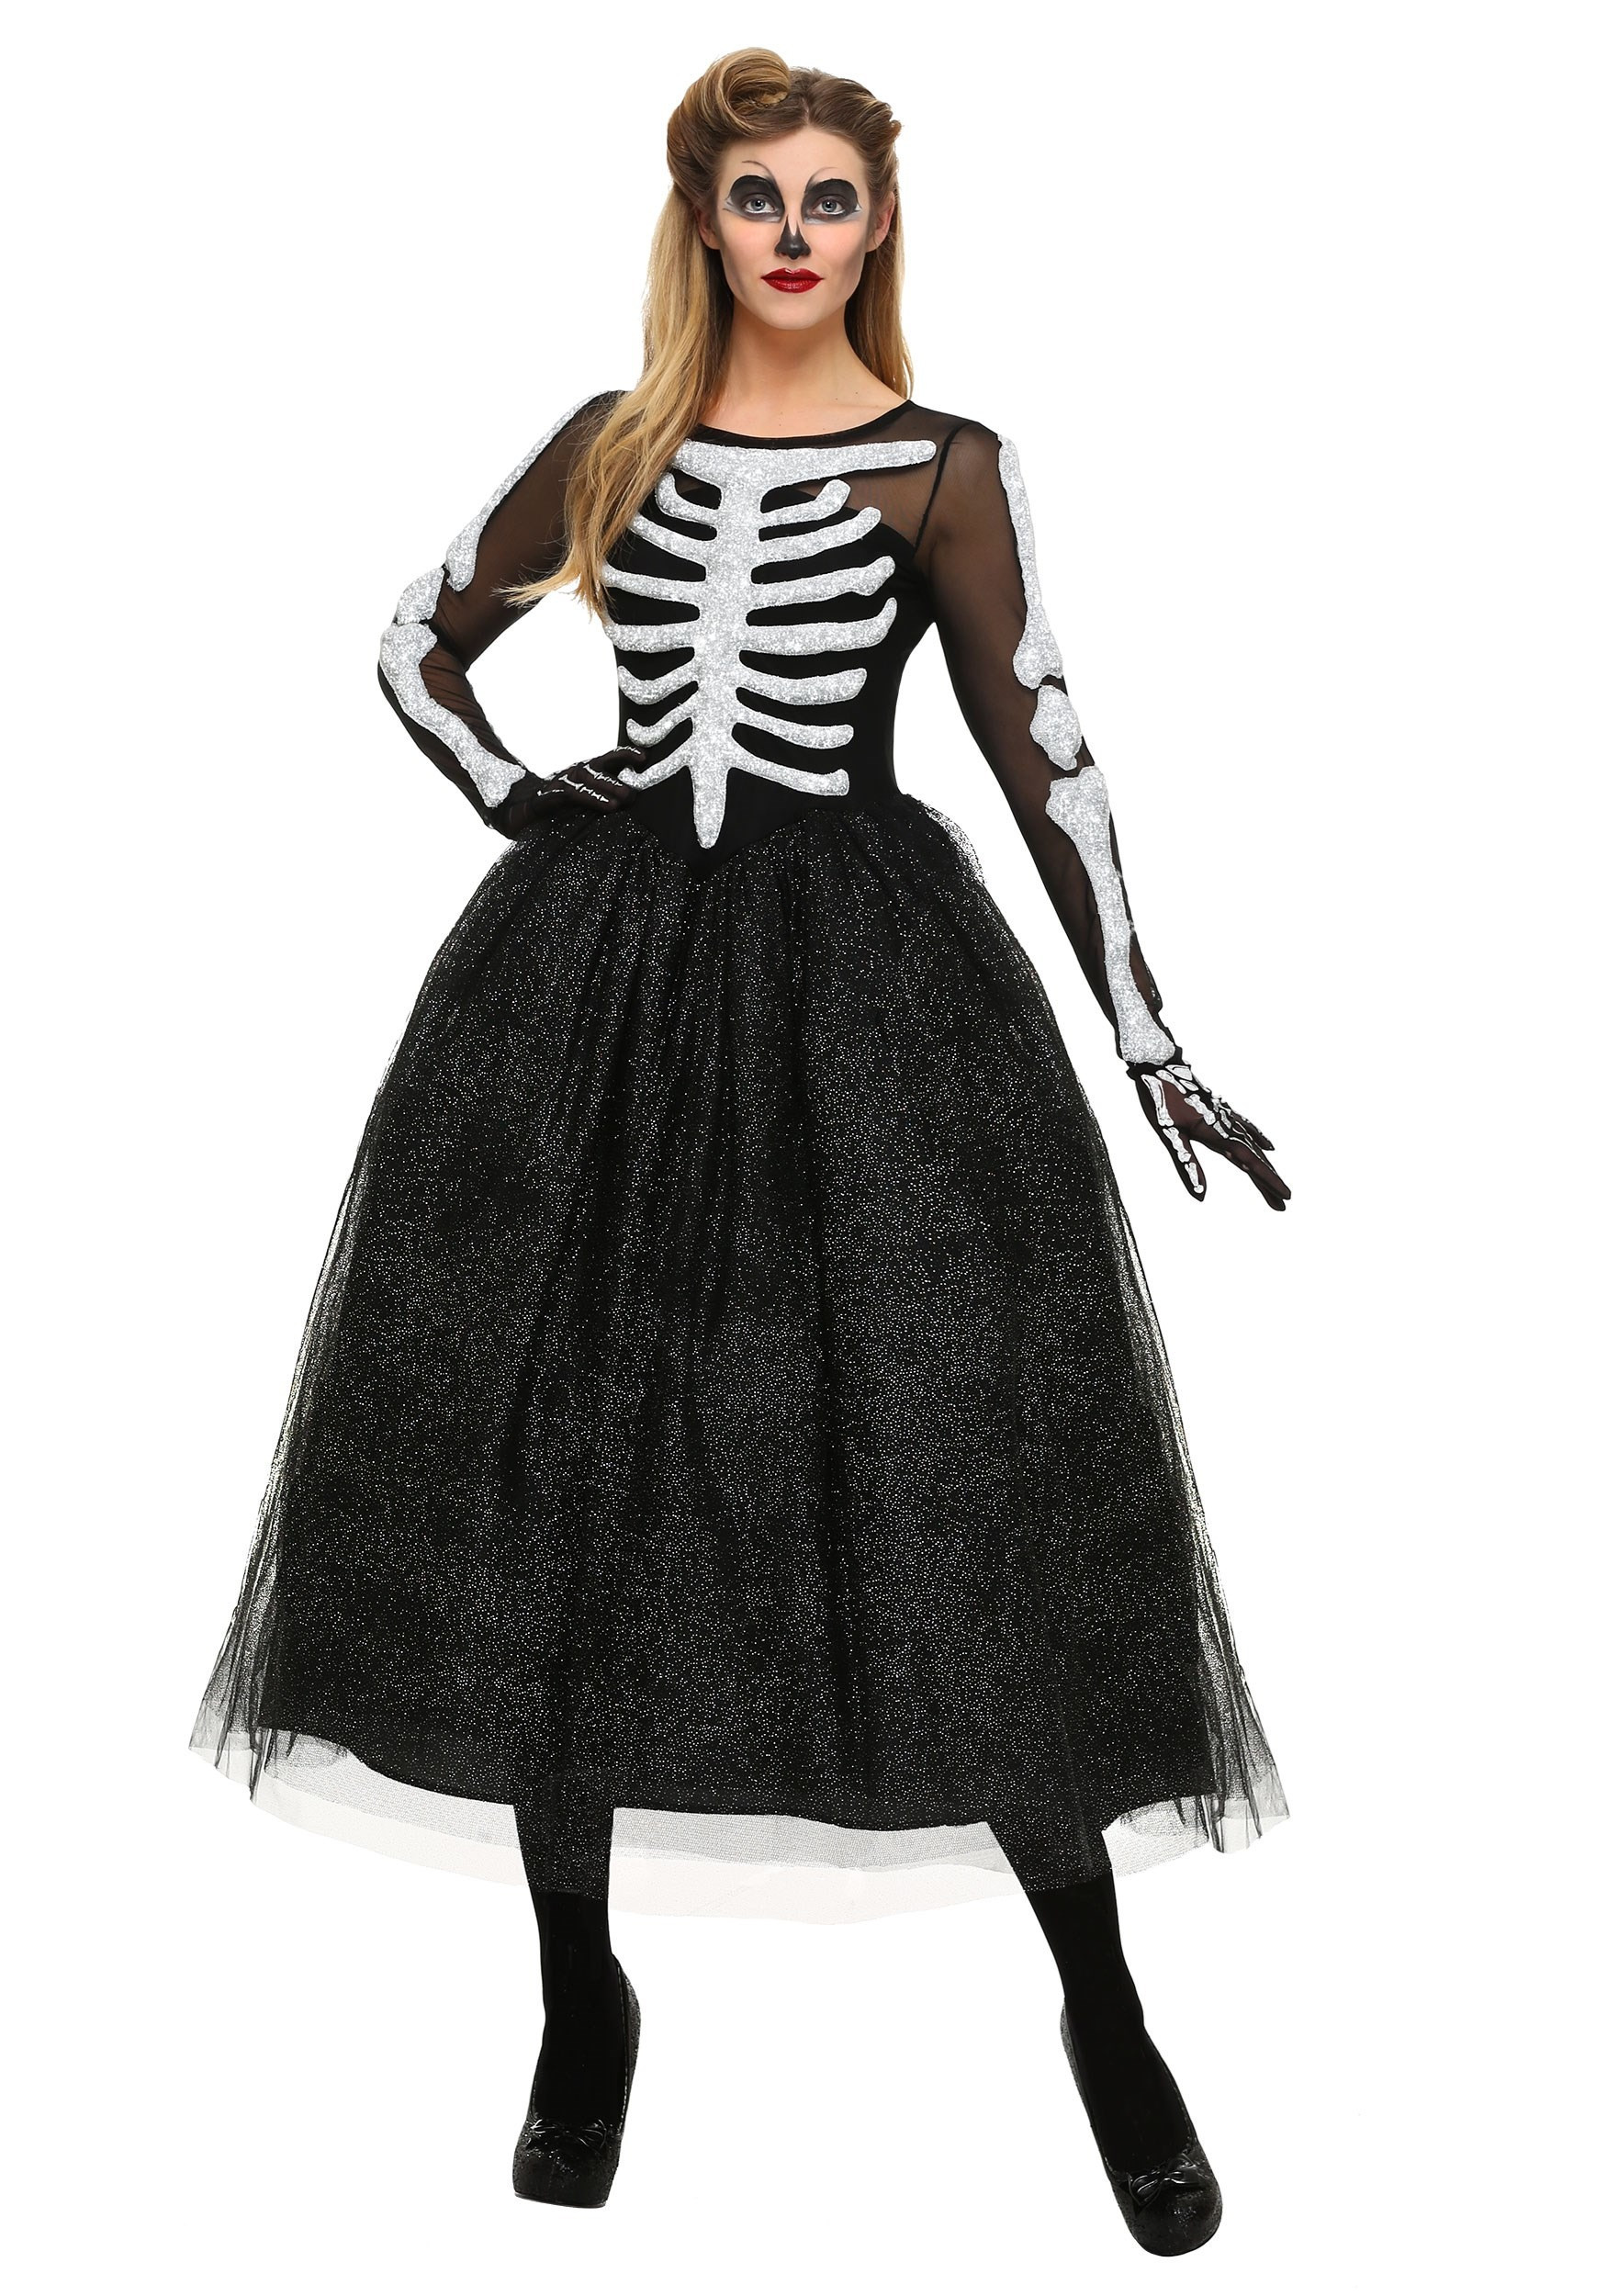 Plus Size Halloween Costume Ideas
 Women s Skeleton Beauty Plus Size Costume